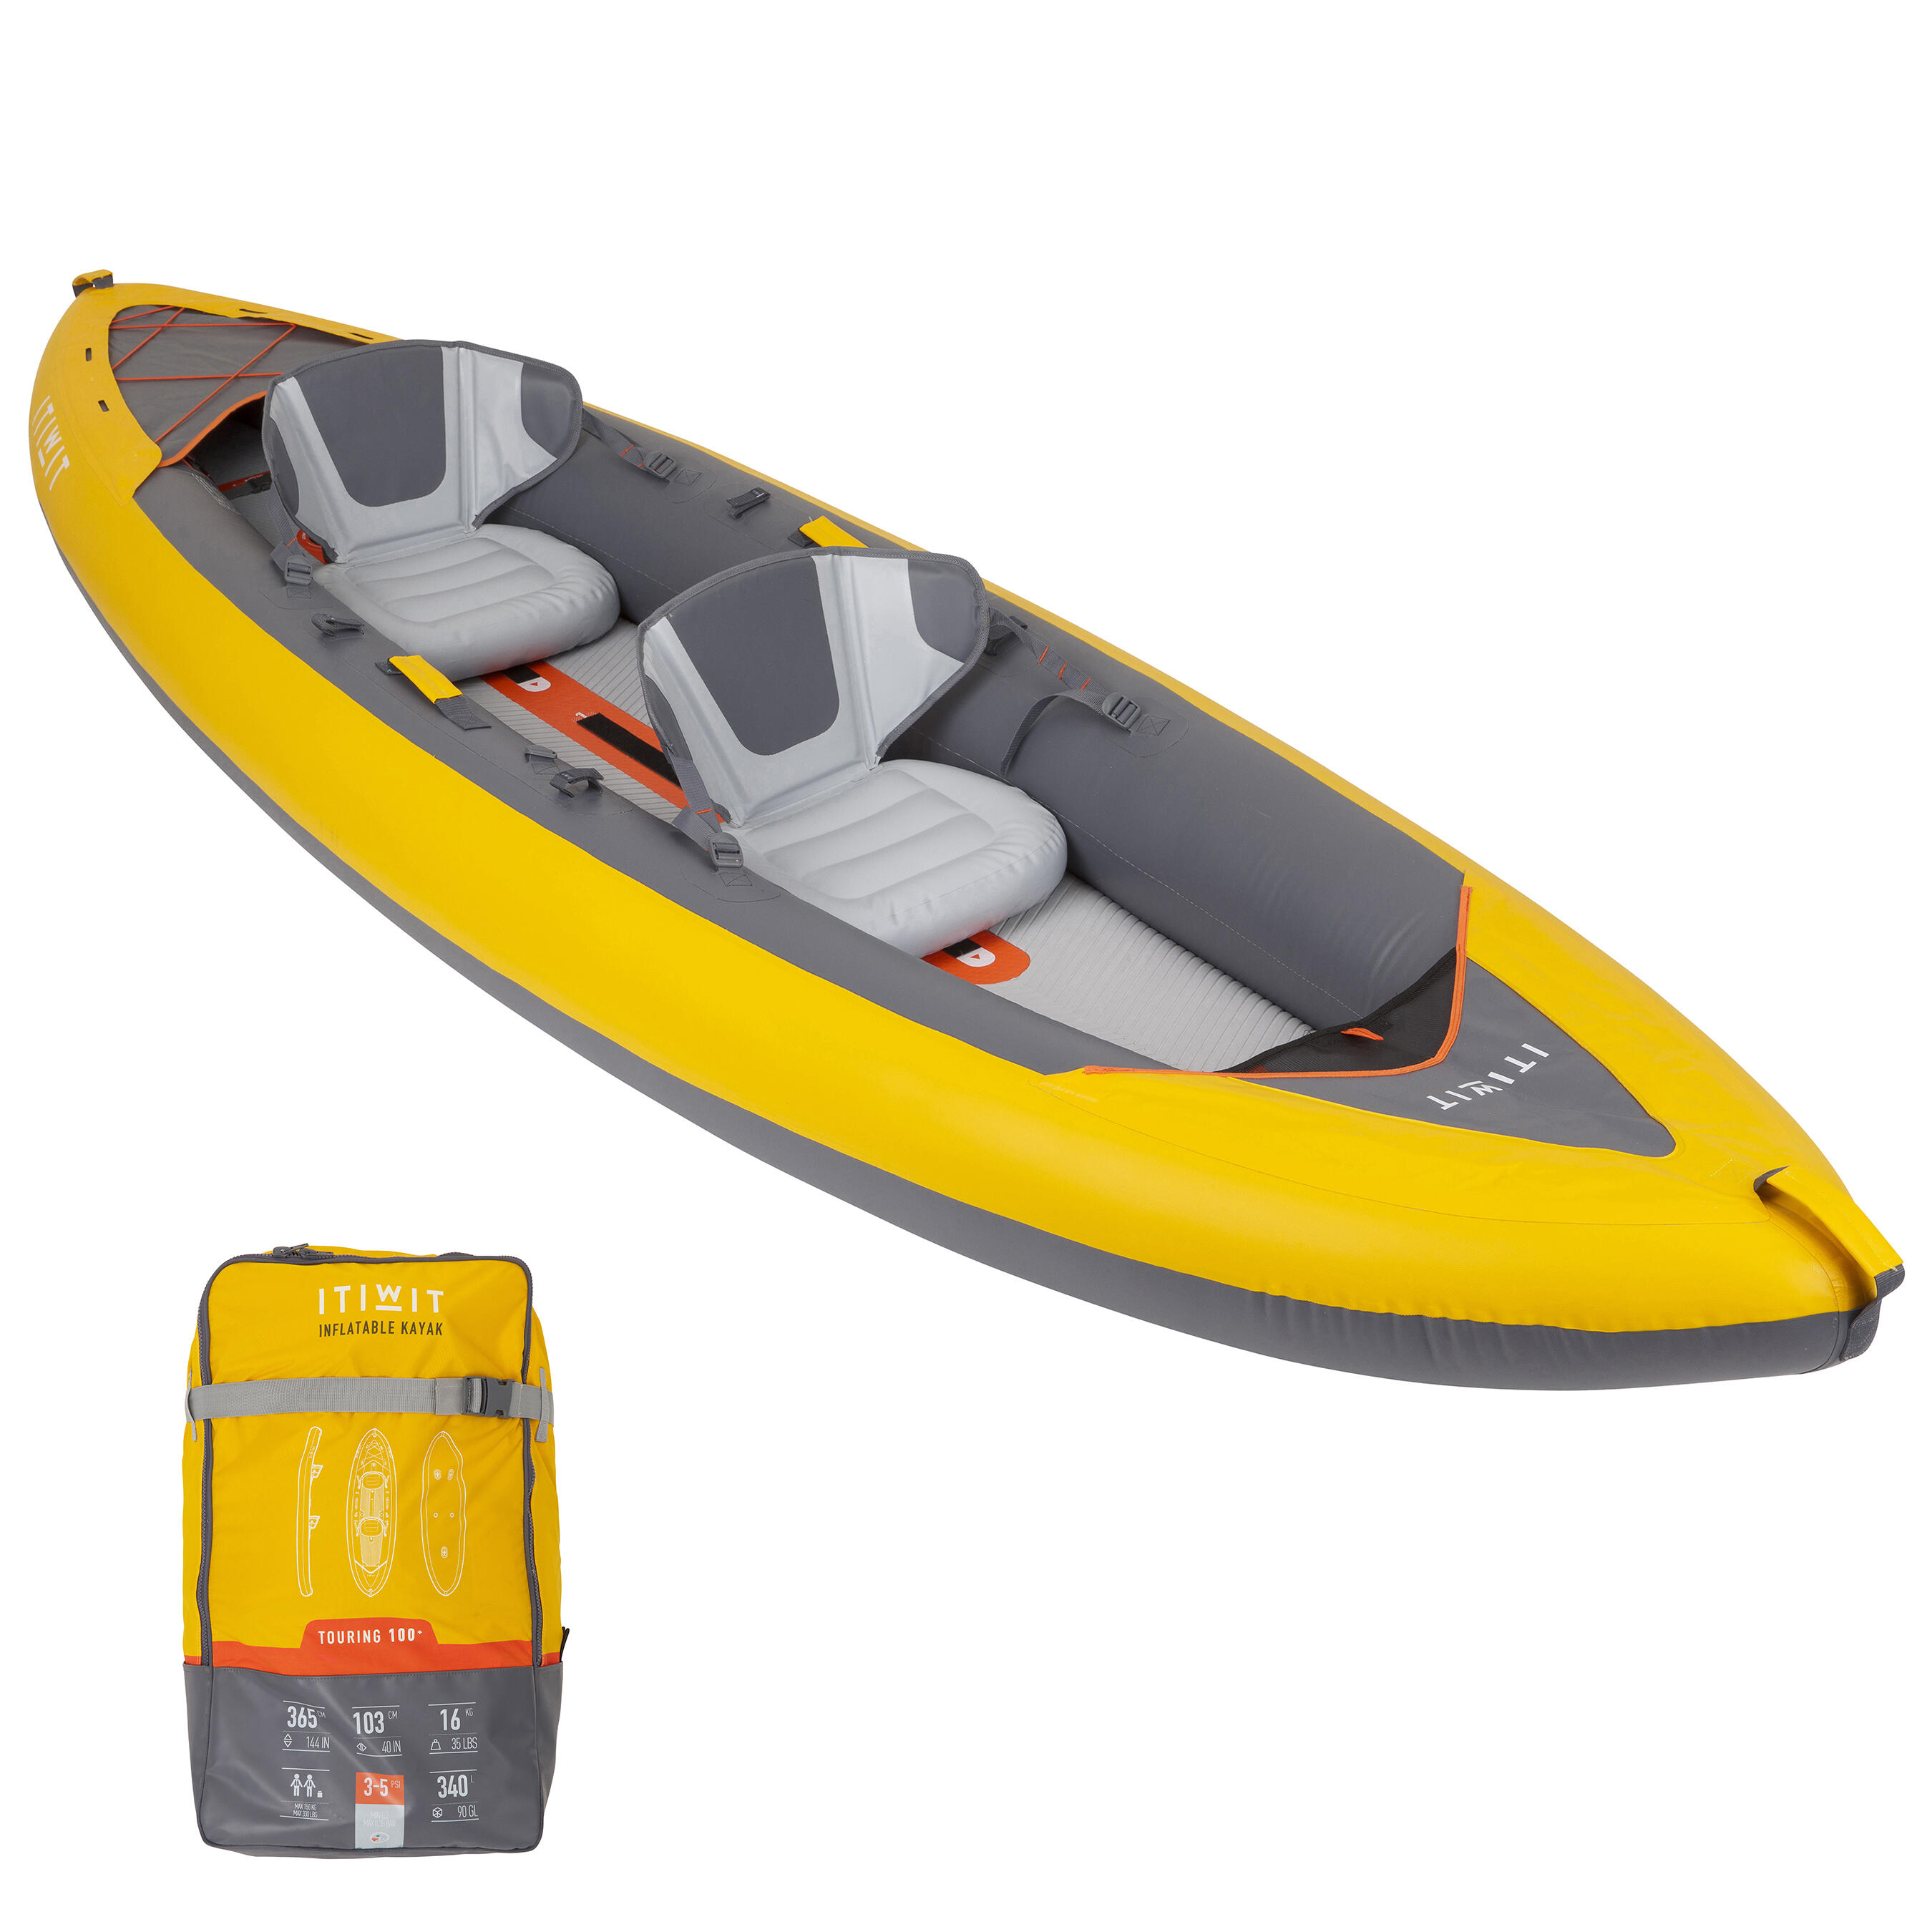 https://contents.mediadecathlon.com/p1633249/4c751bac7962654b1261eefb6590502090c4be570f1ec9c865fe9e42ac09d626/2-seat-inflatable-kayak-kti-100-yellow.jpg